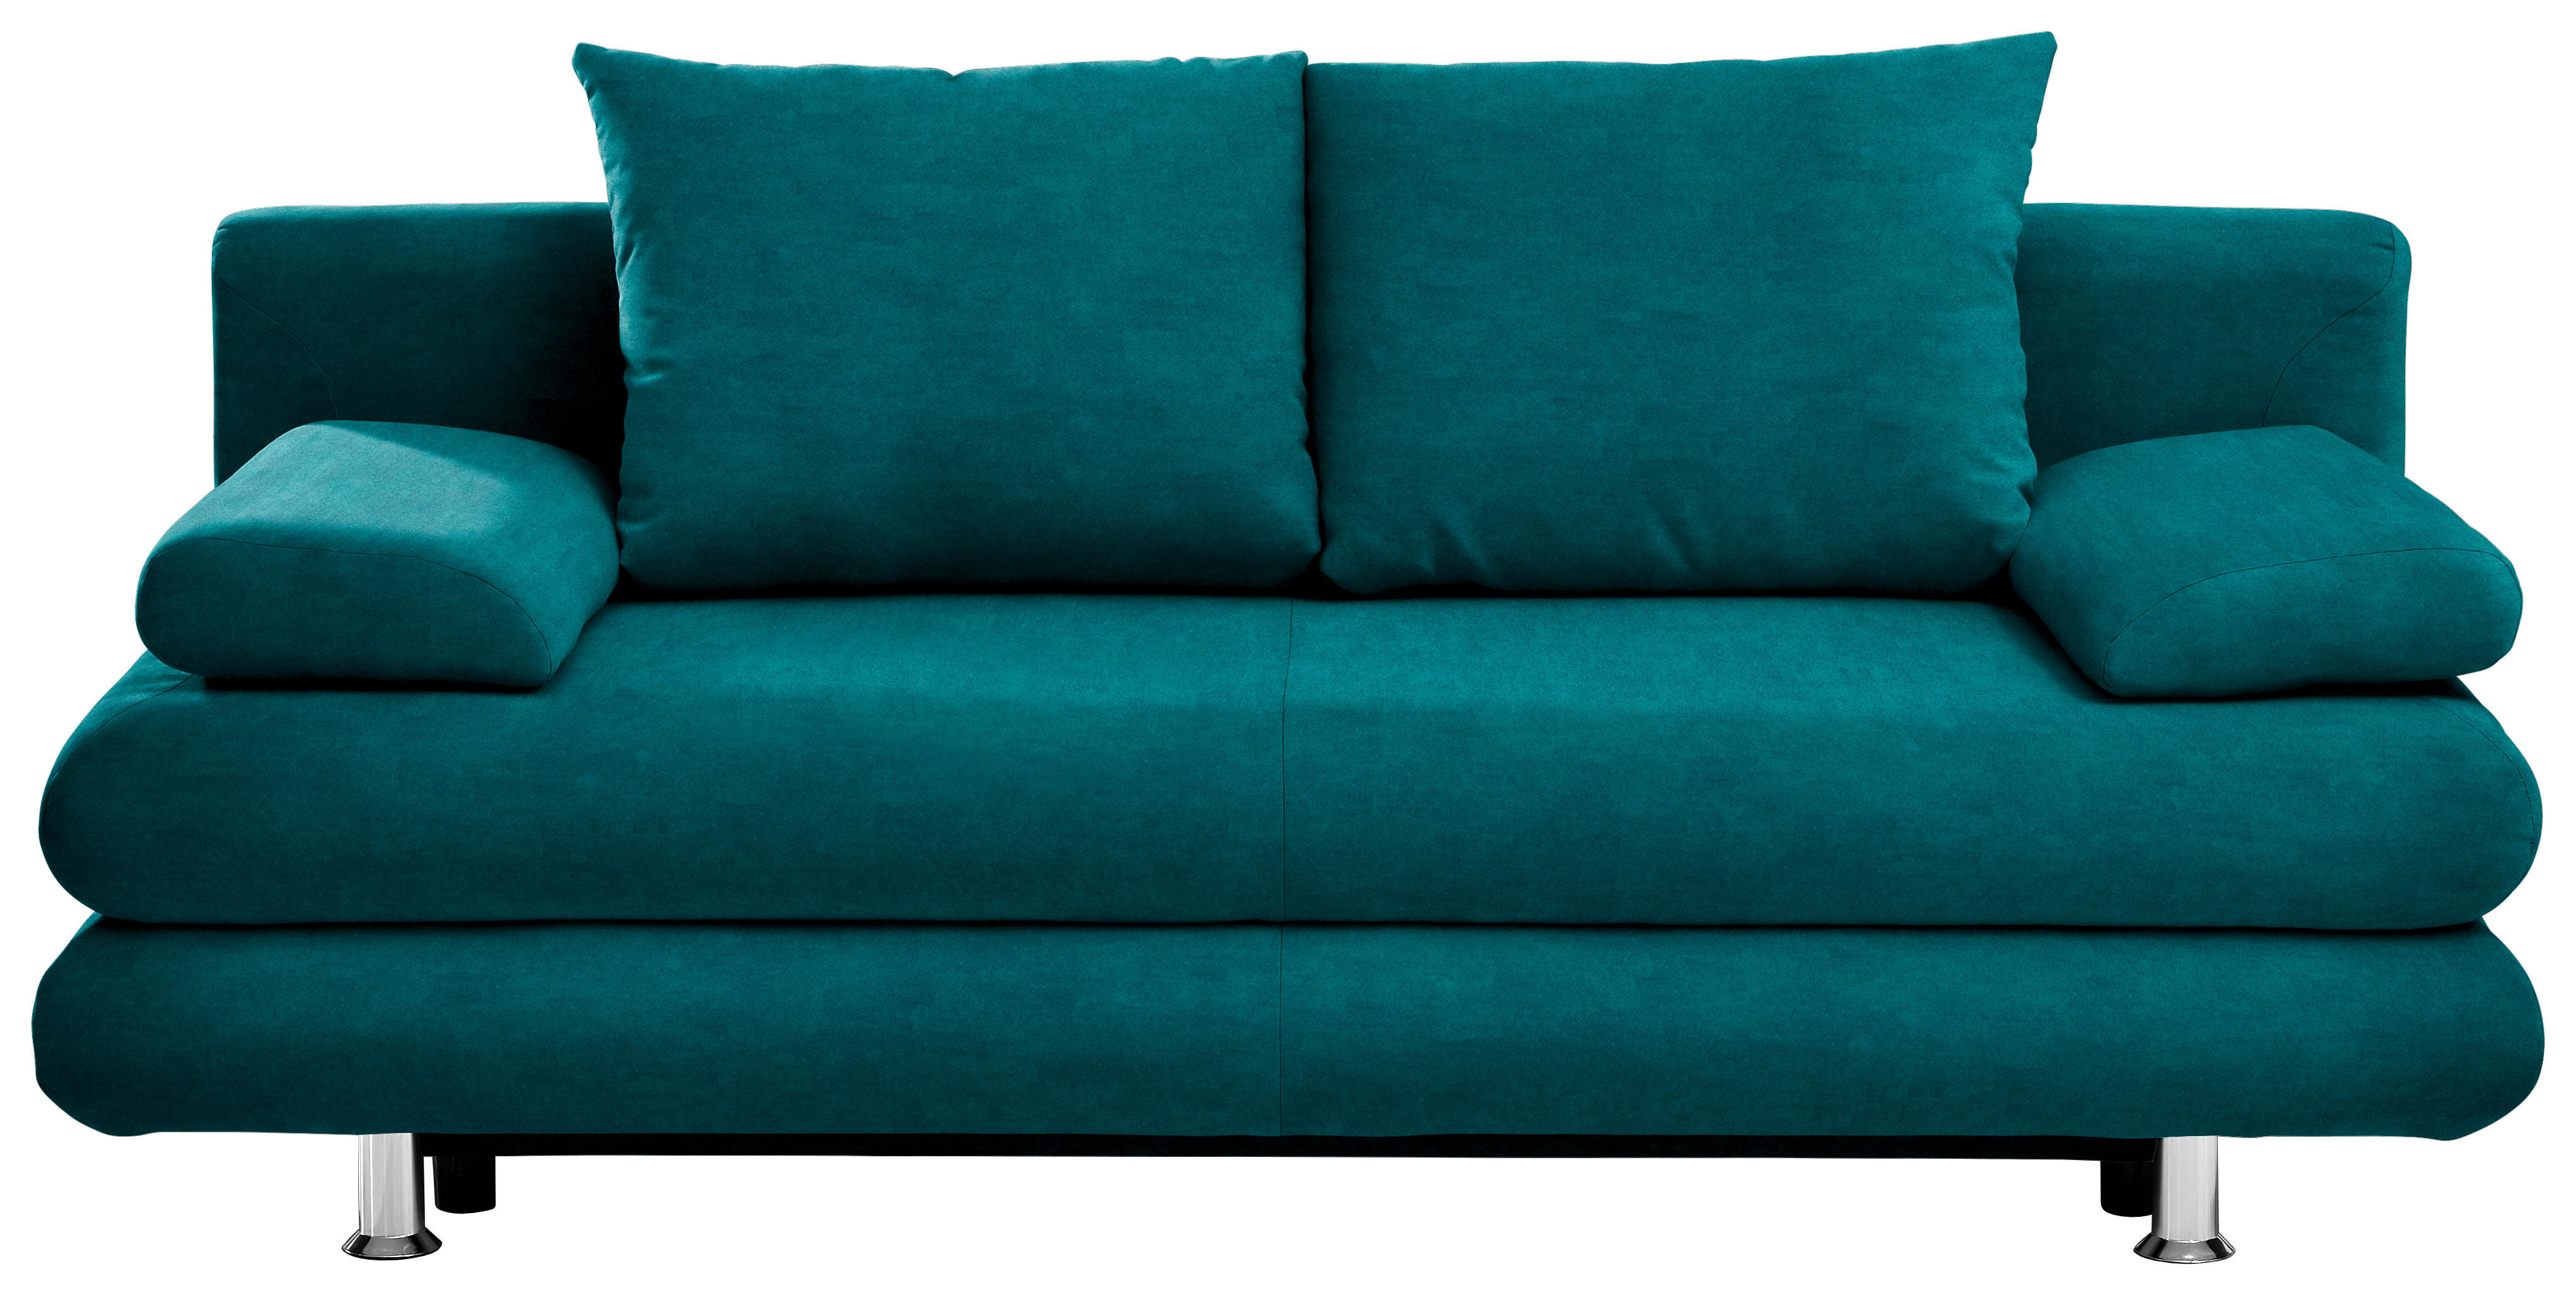 SCHLAFSOFA Velours Blau  - Chromfarben/Blau, Design, Kunststoff/Textil (196/74/90cm) - Carryhome